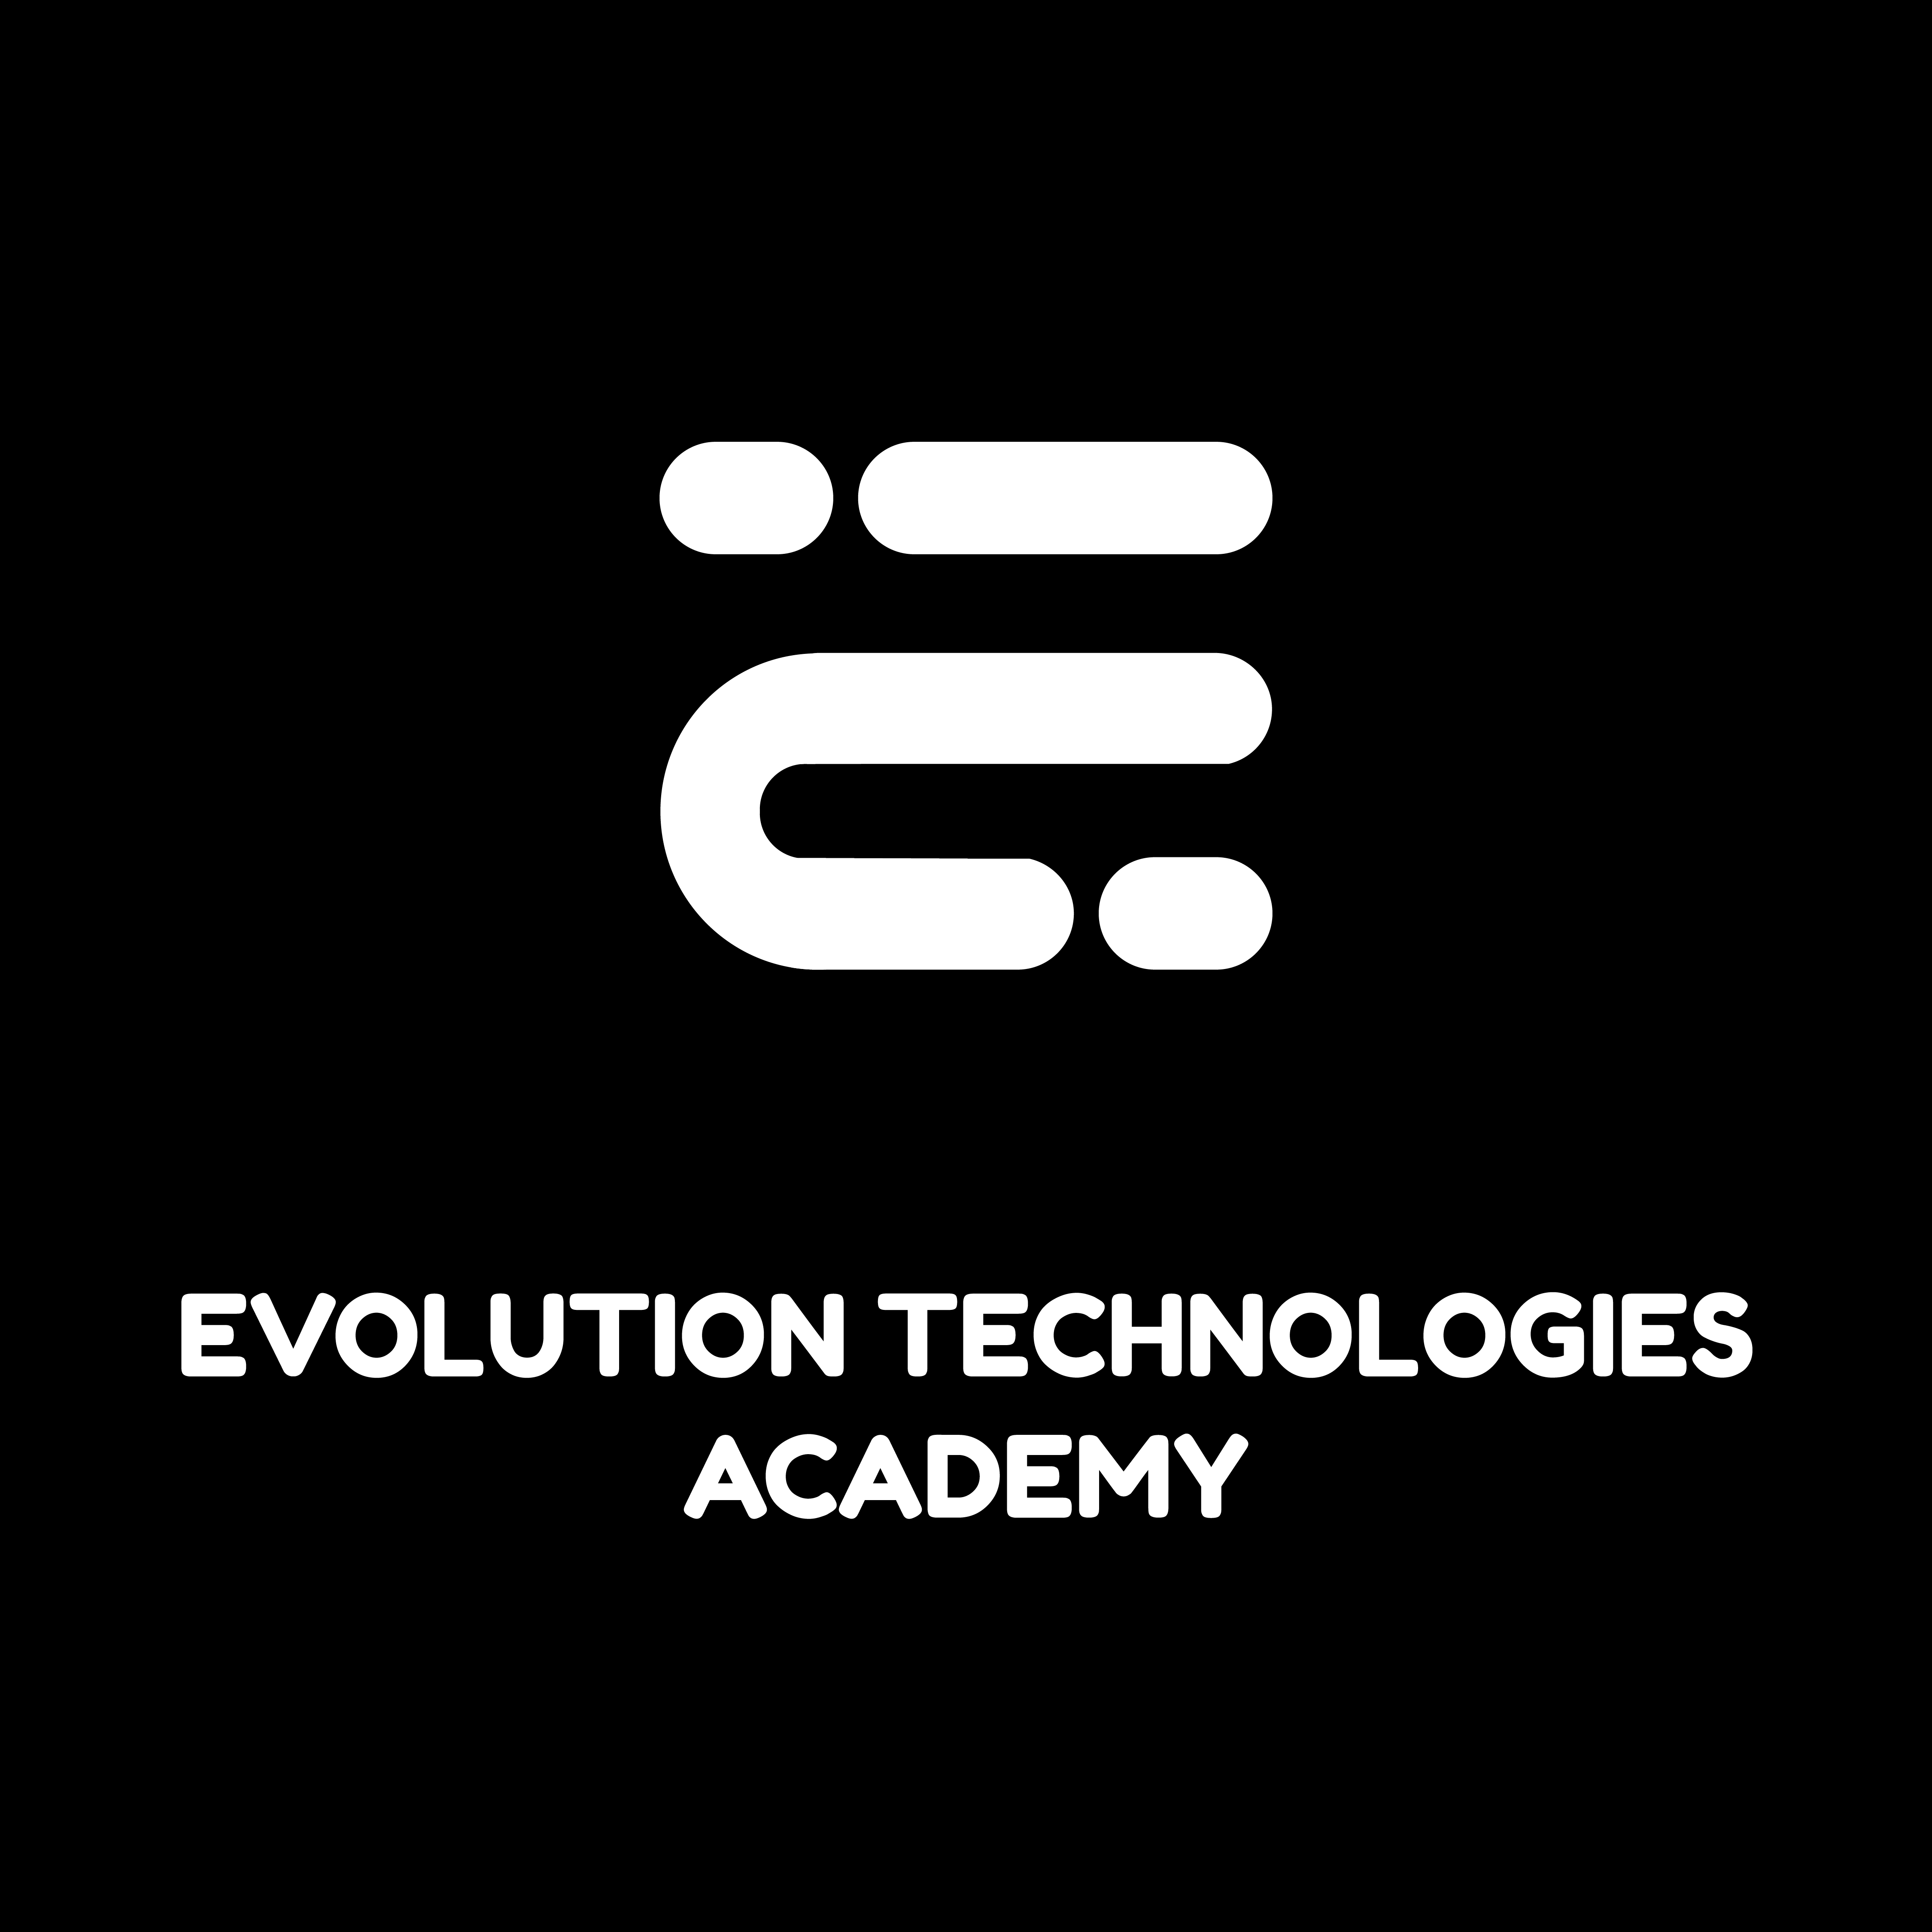 Evolution Technologies Academy - Rank.uz